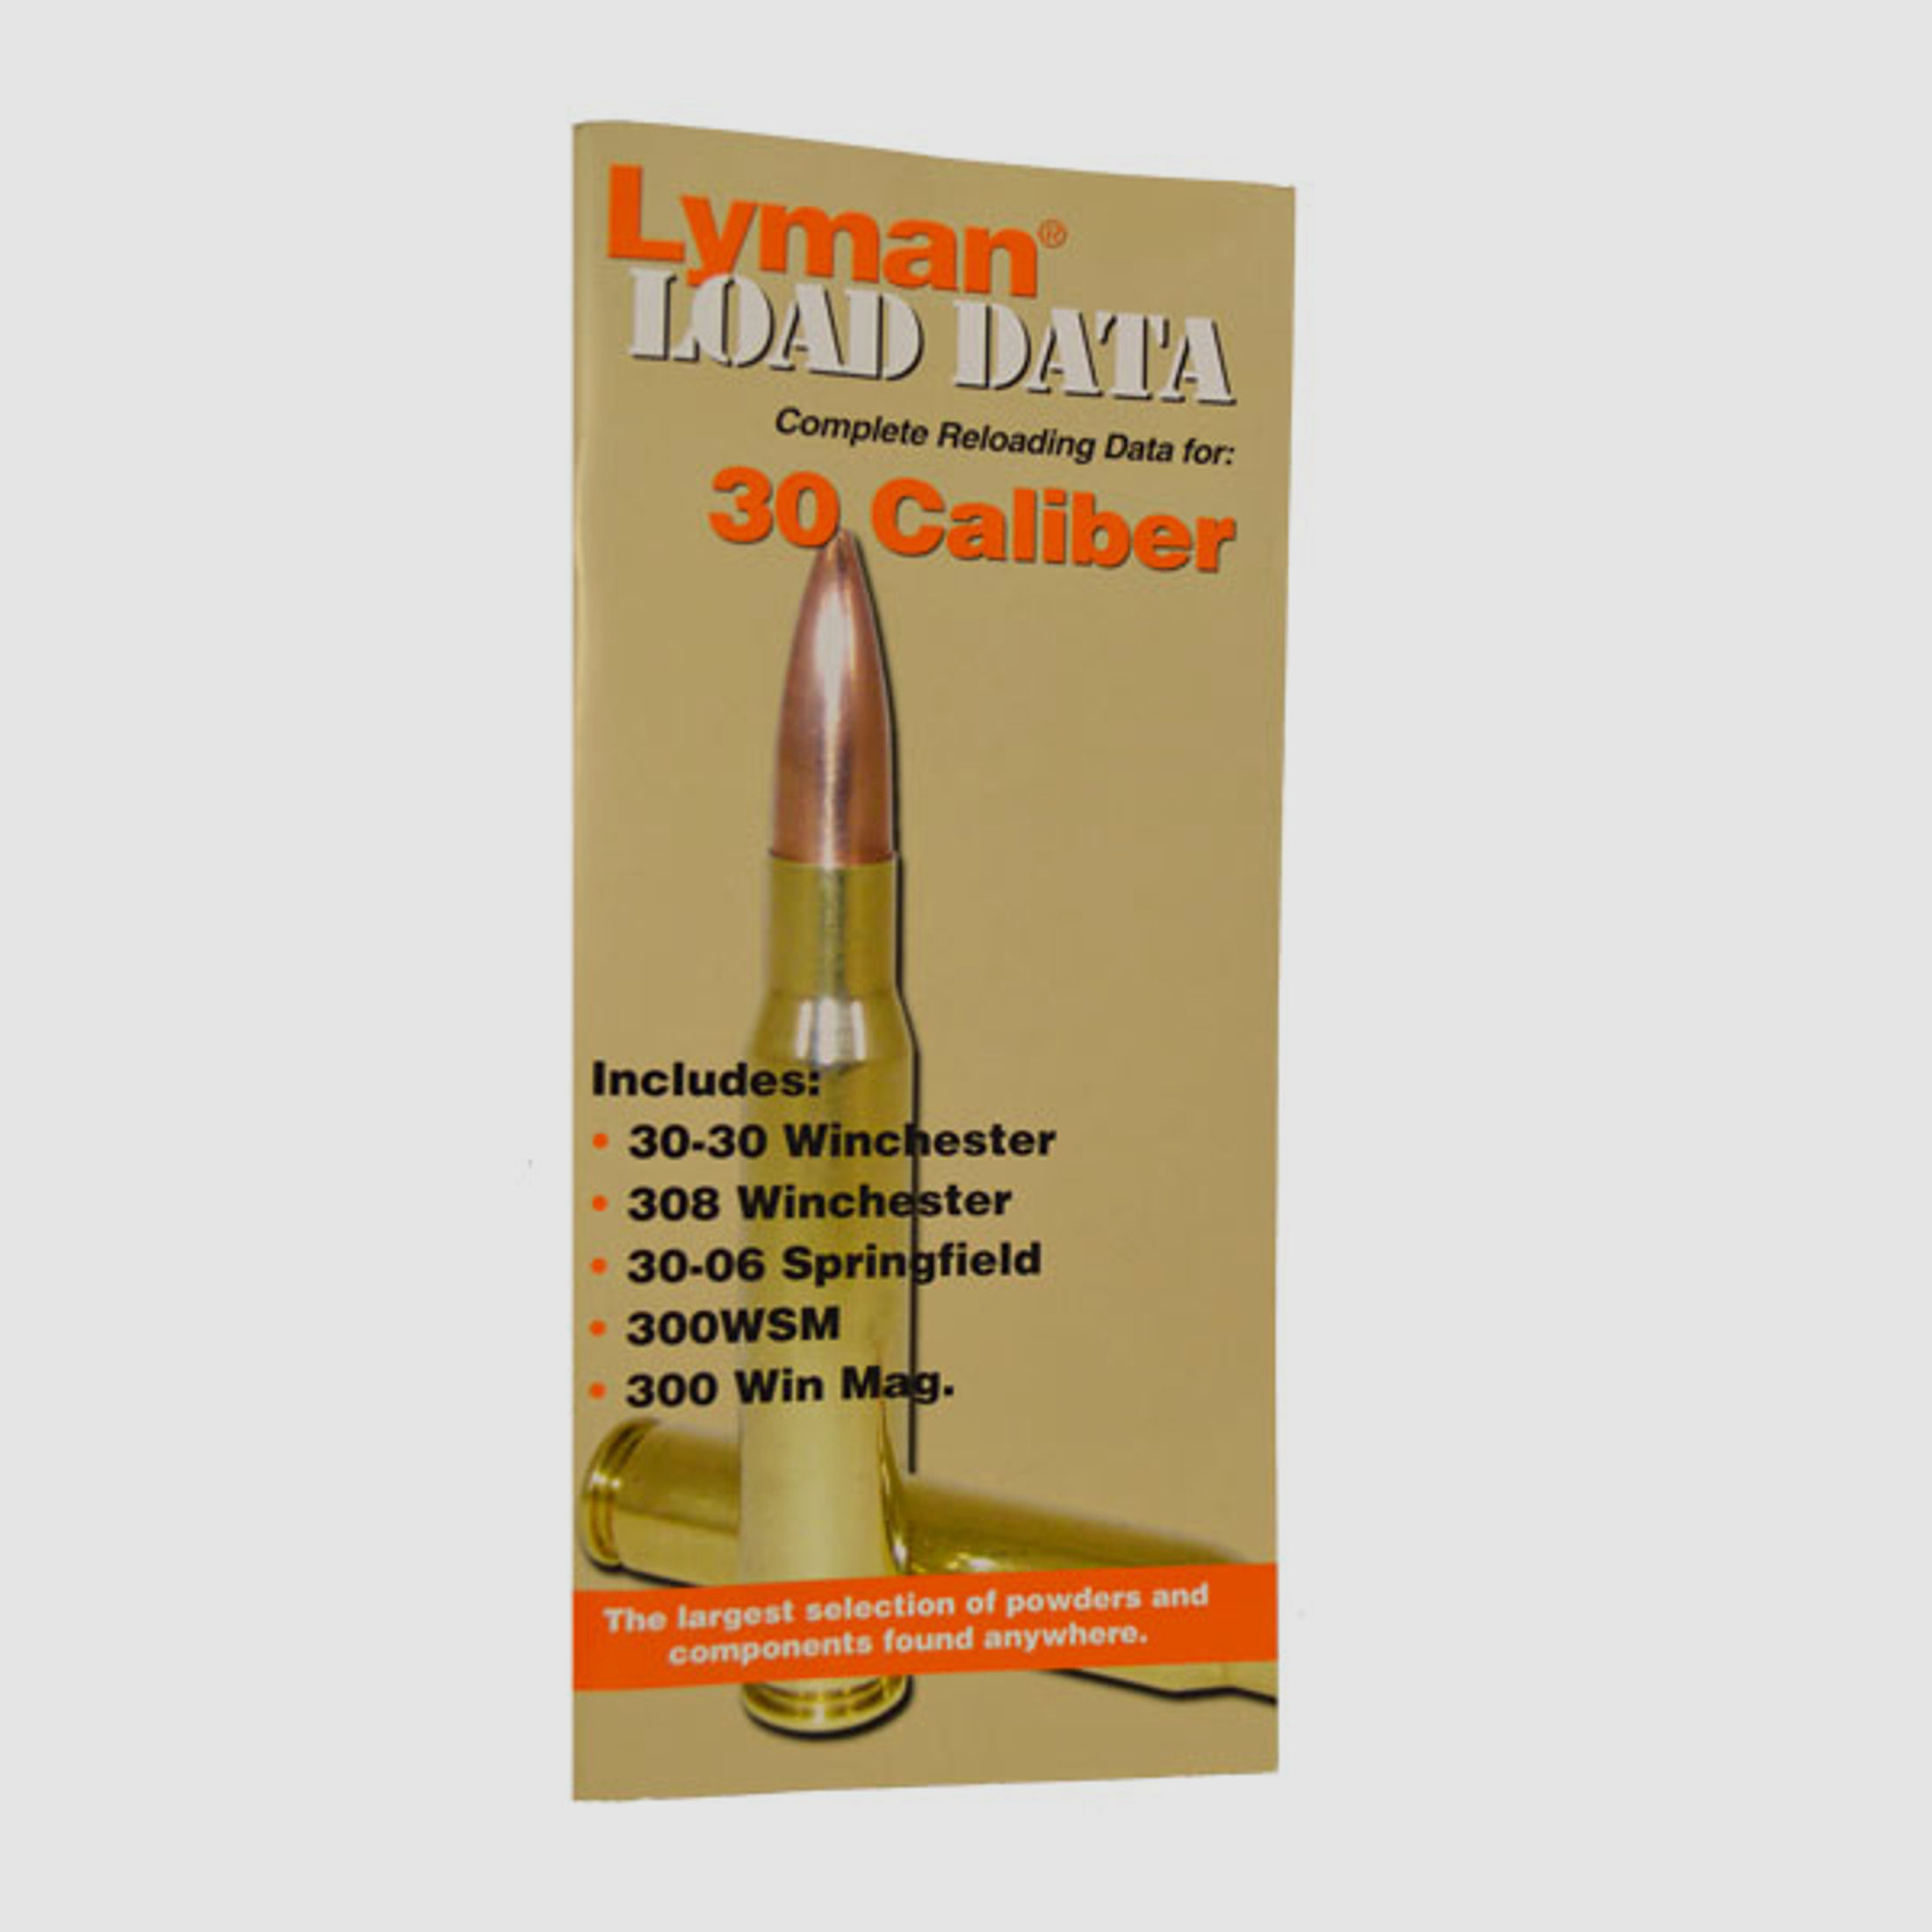 Lyman Wiederladebuch 30 Caliber